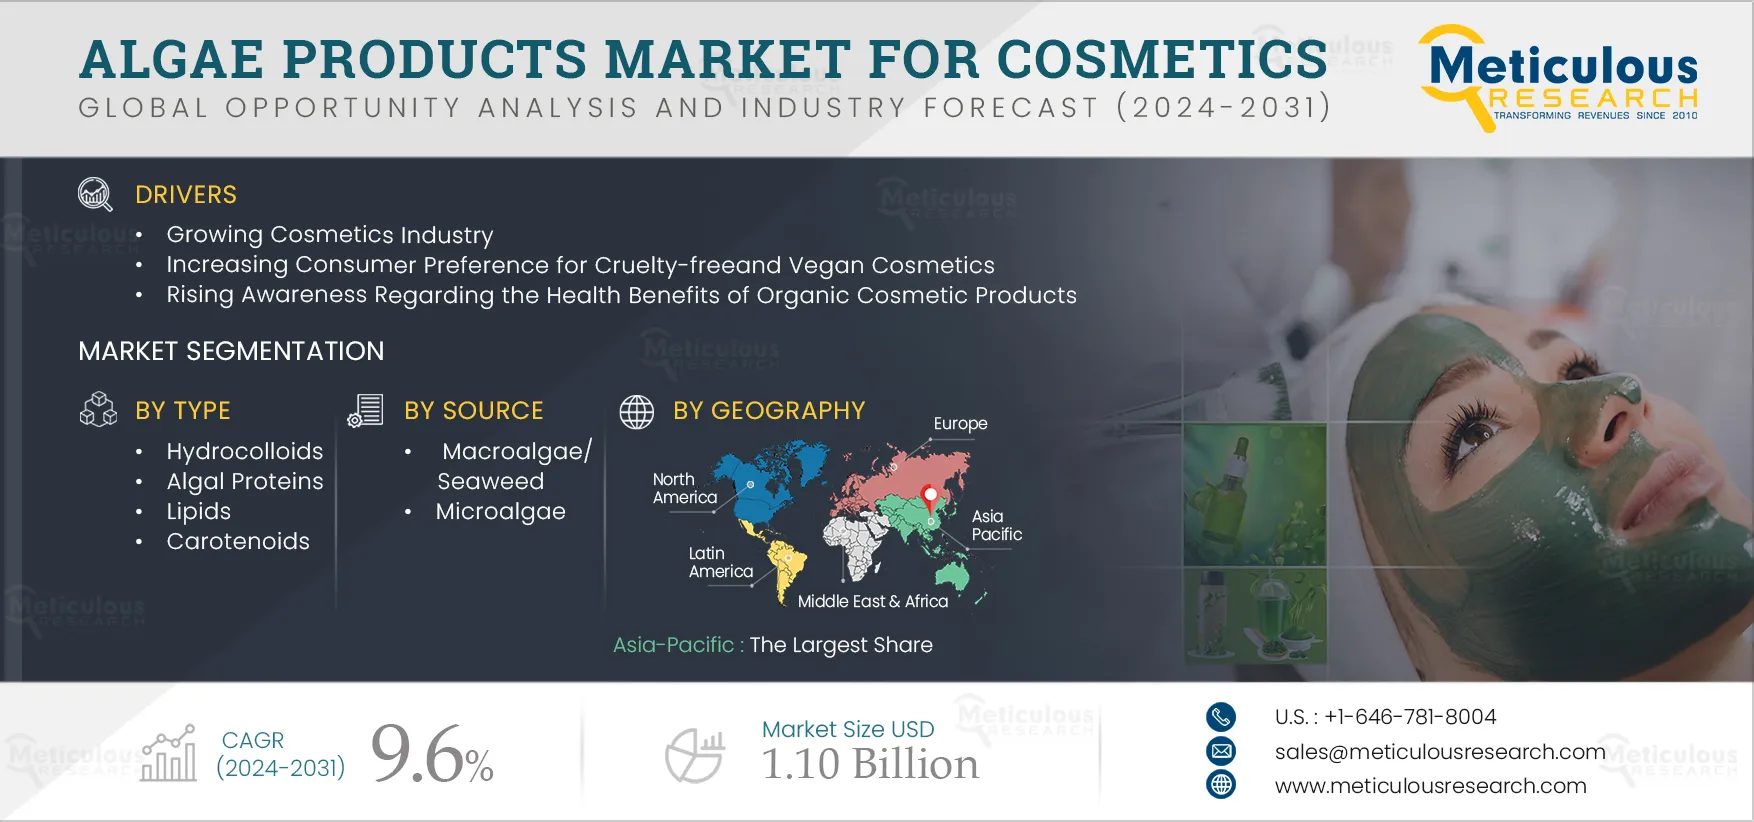 Algae Products Market for Cosmetics